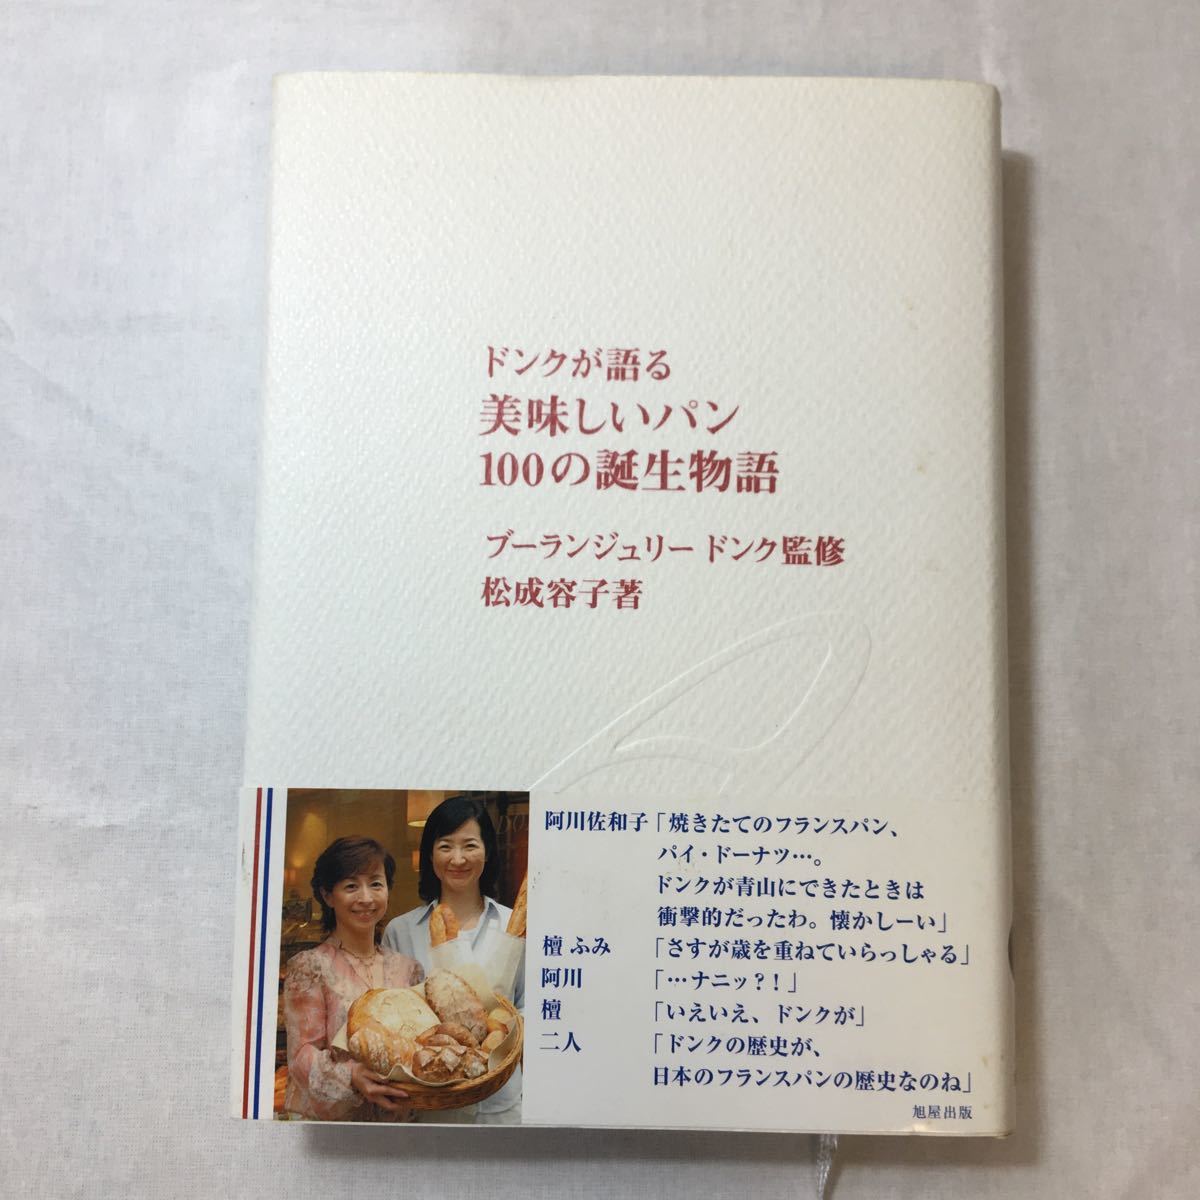 zaa-370♪ドンクが語る美味しいパン100の誕生物語 単行本 2005/8/1 松成 容子 (著), ブーランジュリードンク (監修)